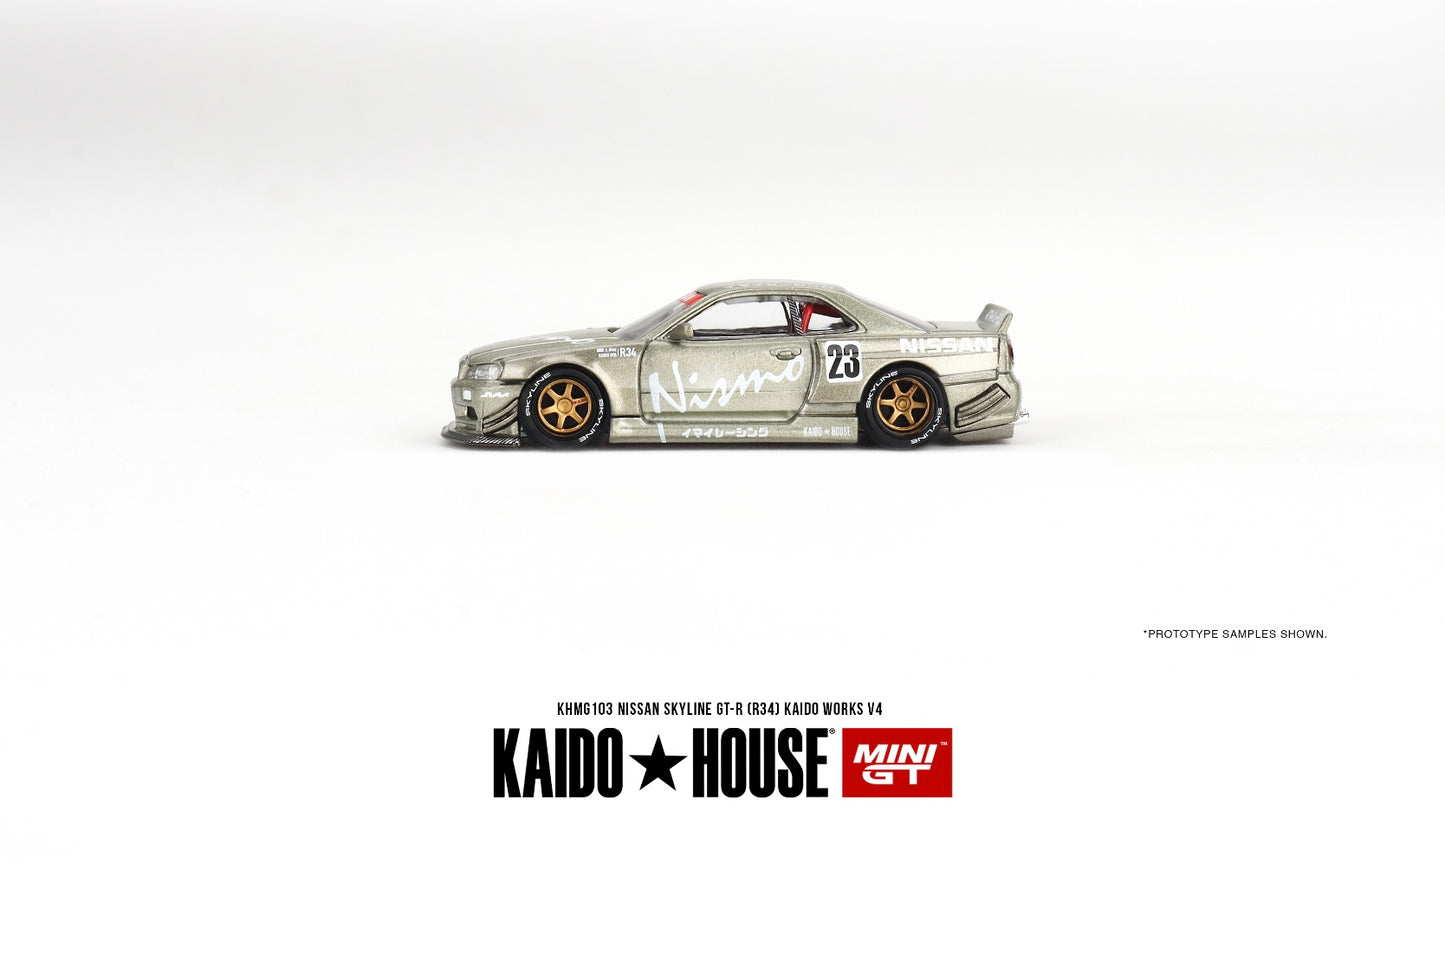 1:64 Nissan Skyline GT-R (R34) Kaido House Mini GT#103 Pre-Order